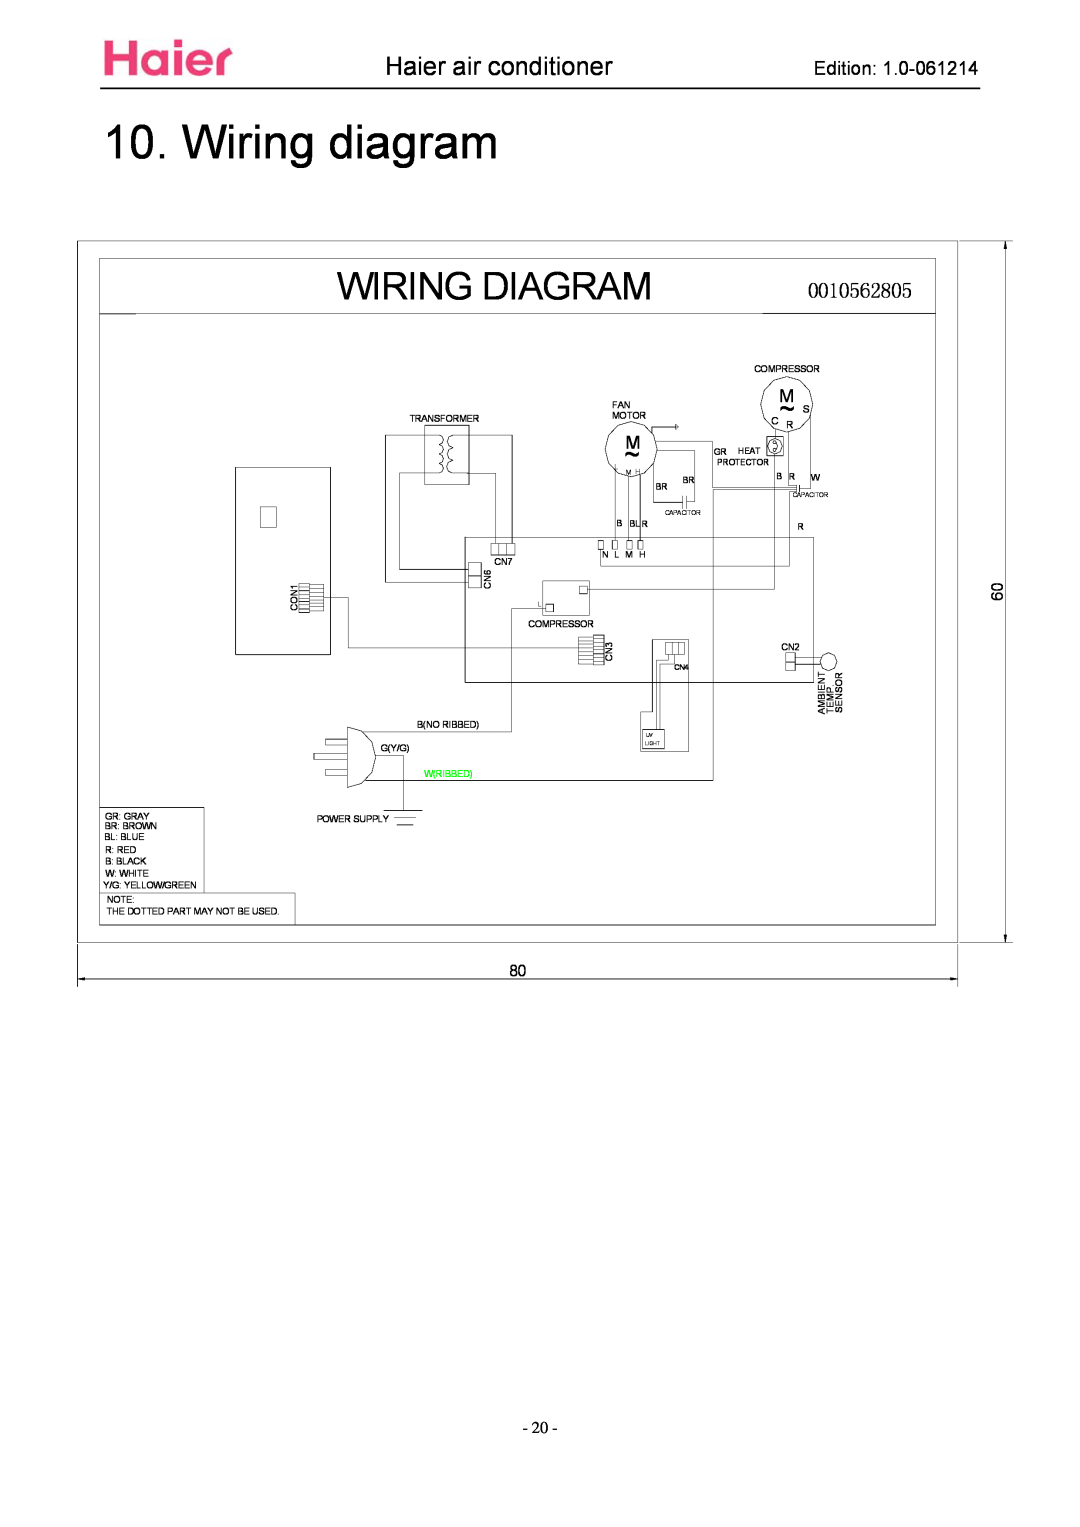 Haier ESA3087 service manual Wiring diagram, Wiring Diagram, Haier air conditioner, C~ S, 0010562805, Wribbed 